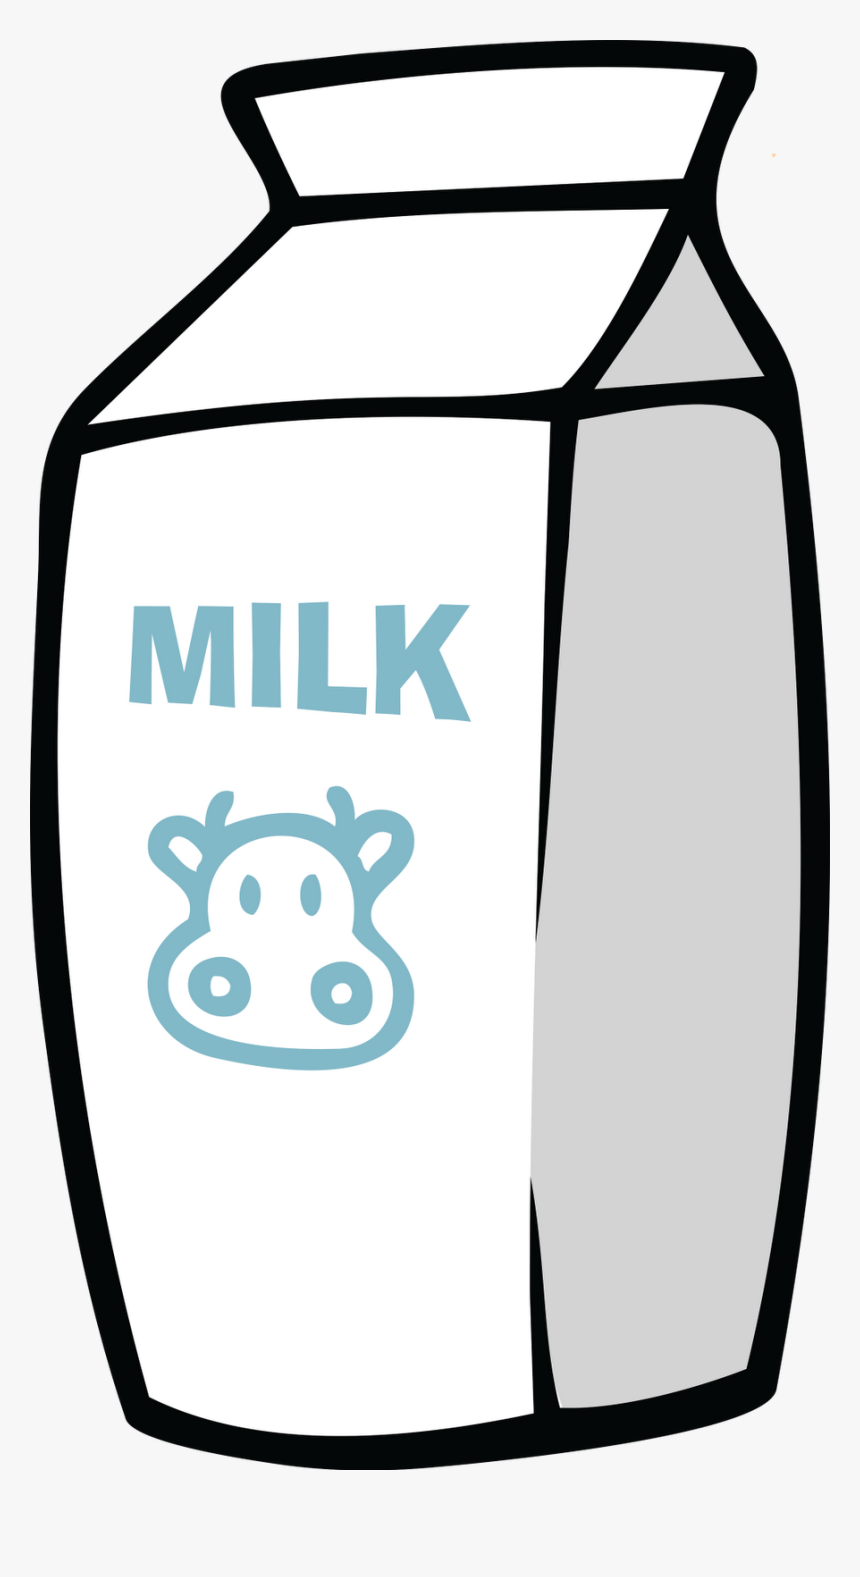 Full Cream Milk Cartoon - Transparent Background Milk Carton Clipart, HD Png Download, Free Download